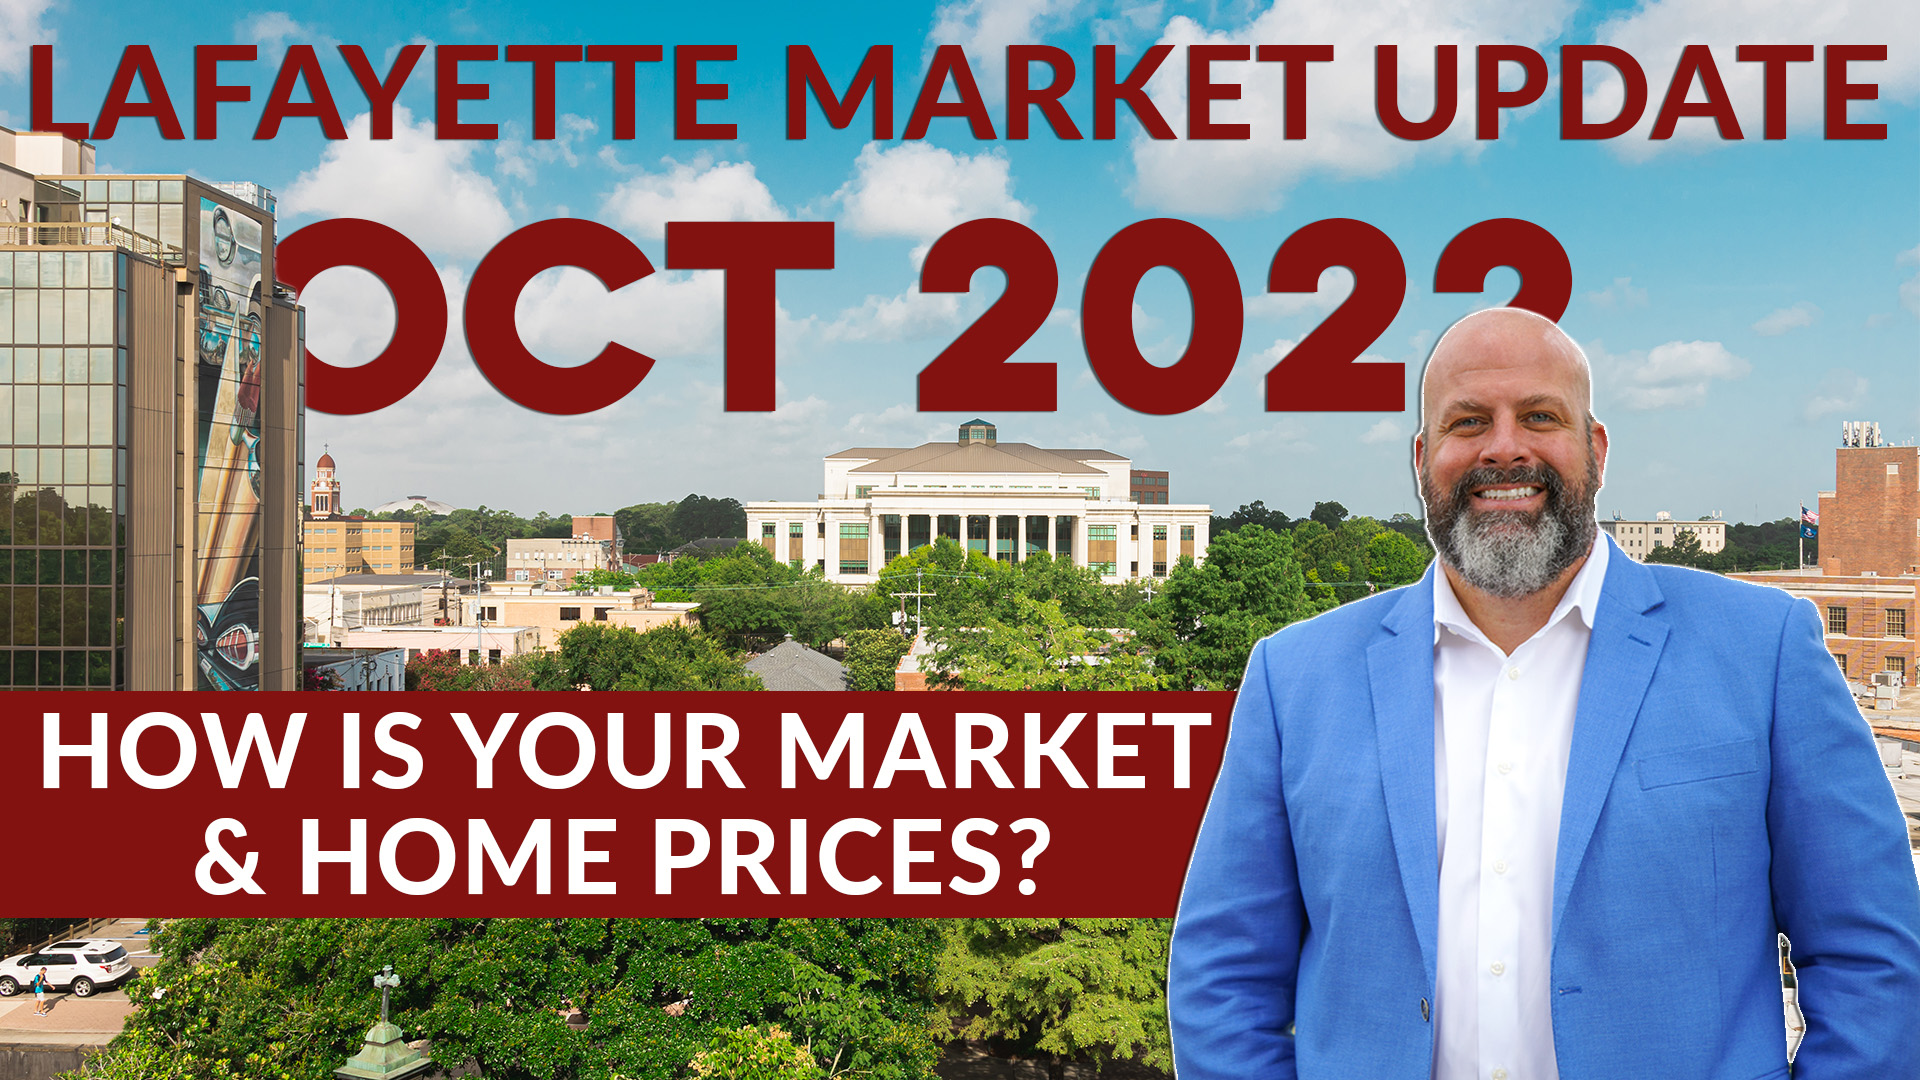 Do you own Real Estate in Lafayette? | Lafayette Market Update